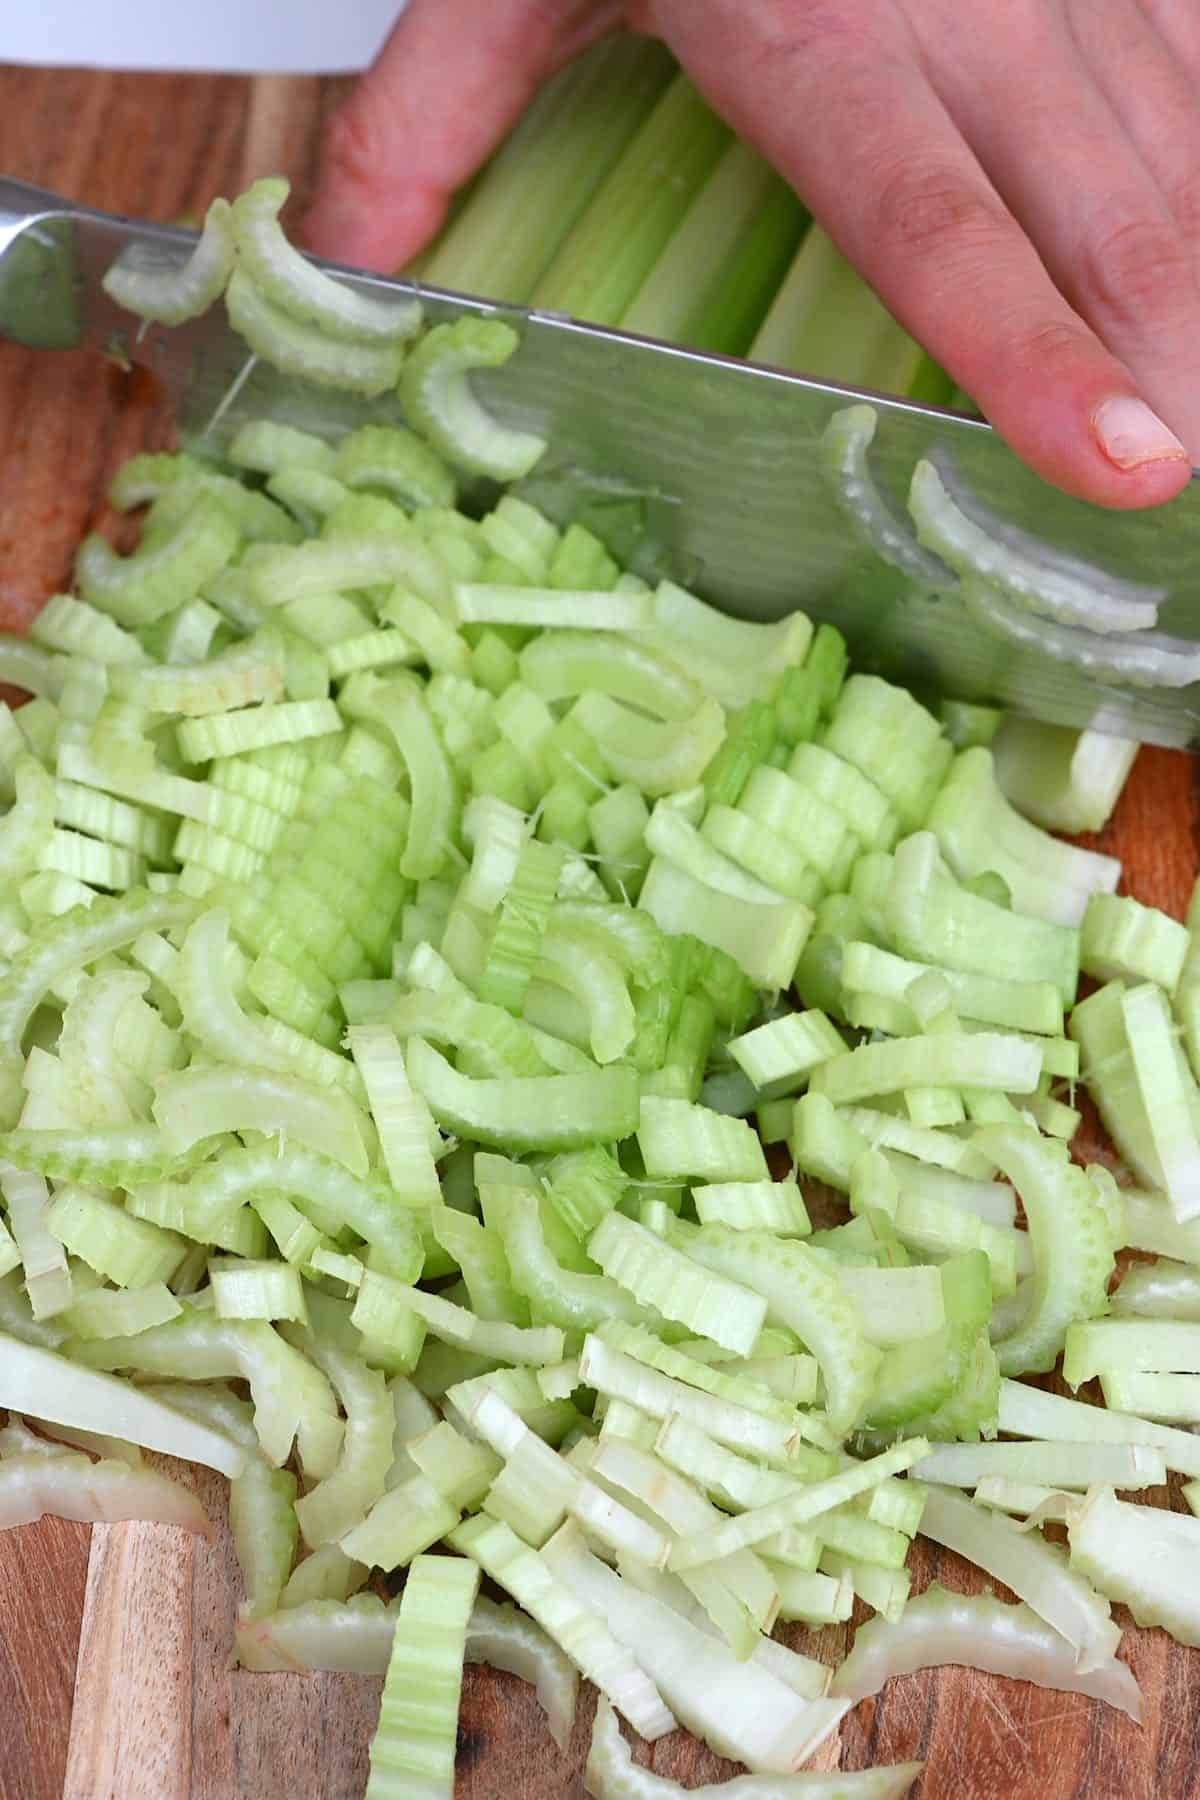 Chopping celery